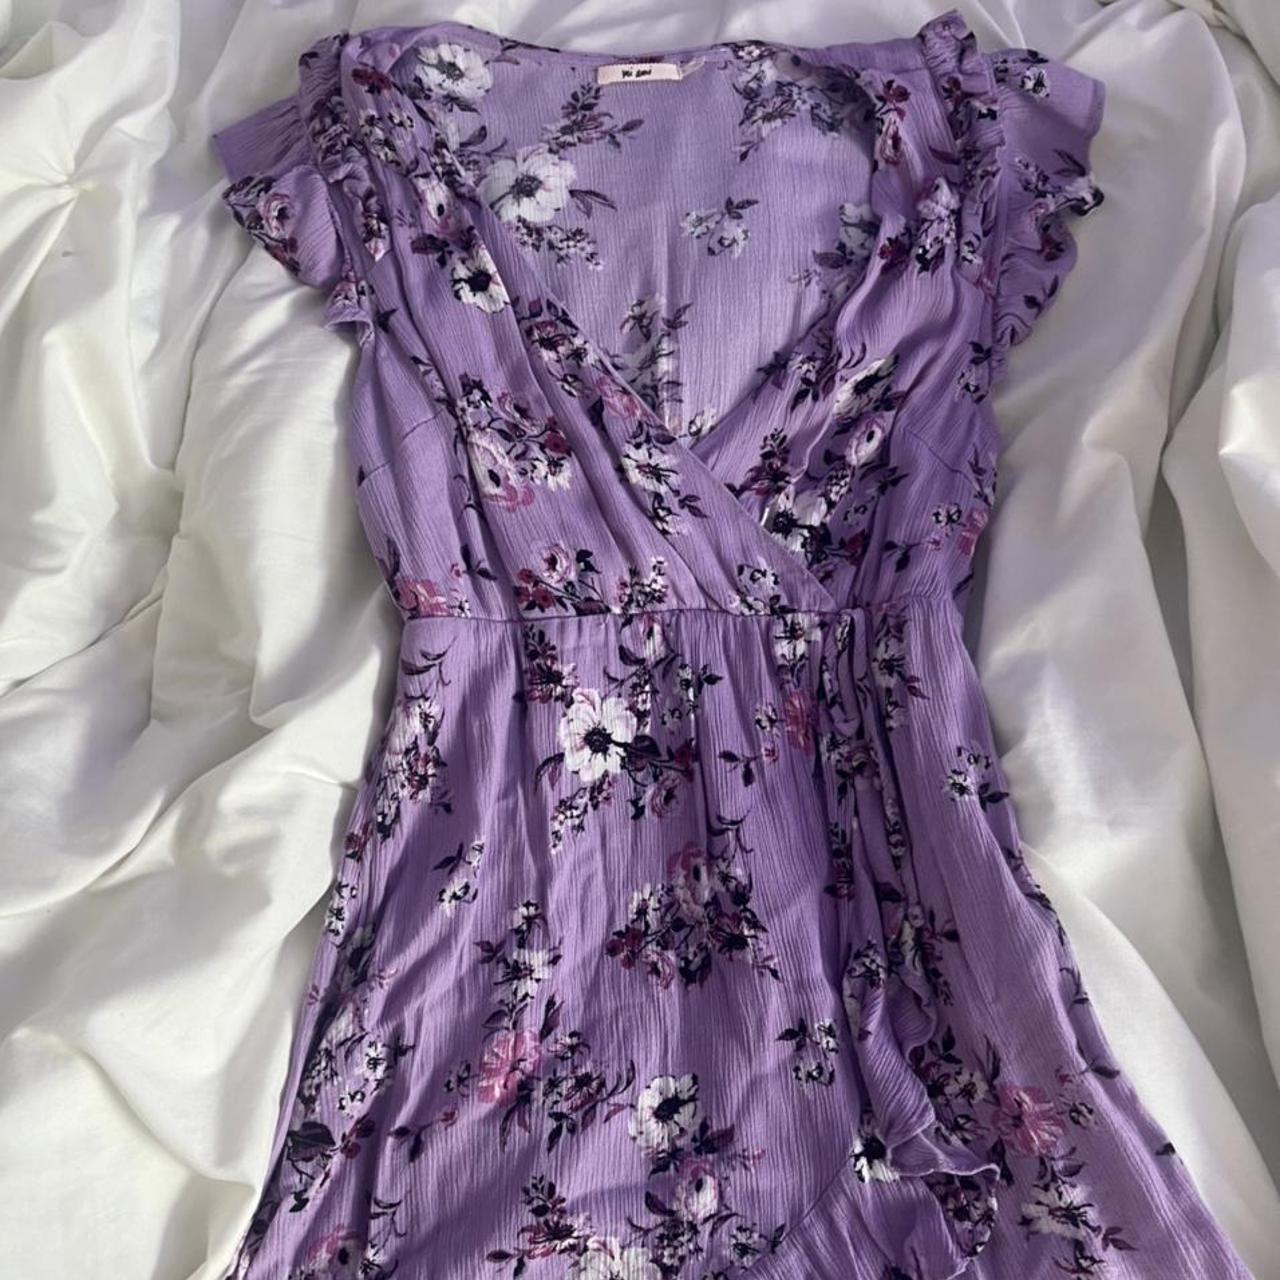 Product Image 1 - beautiful purple floral dress!